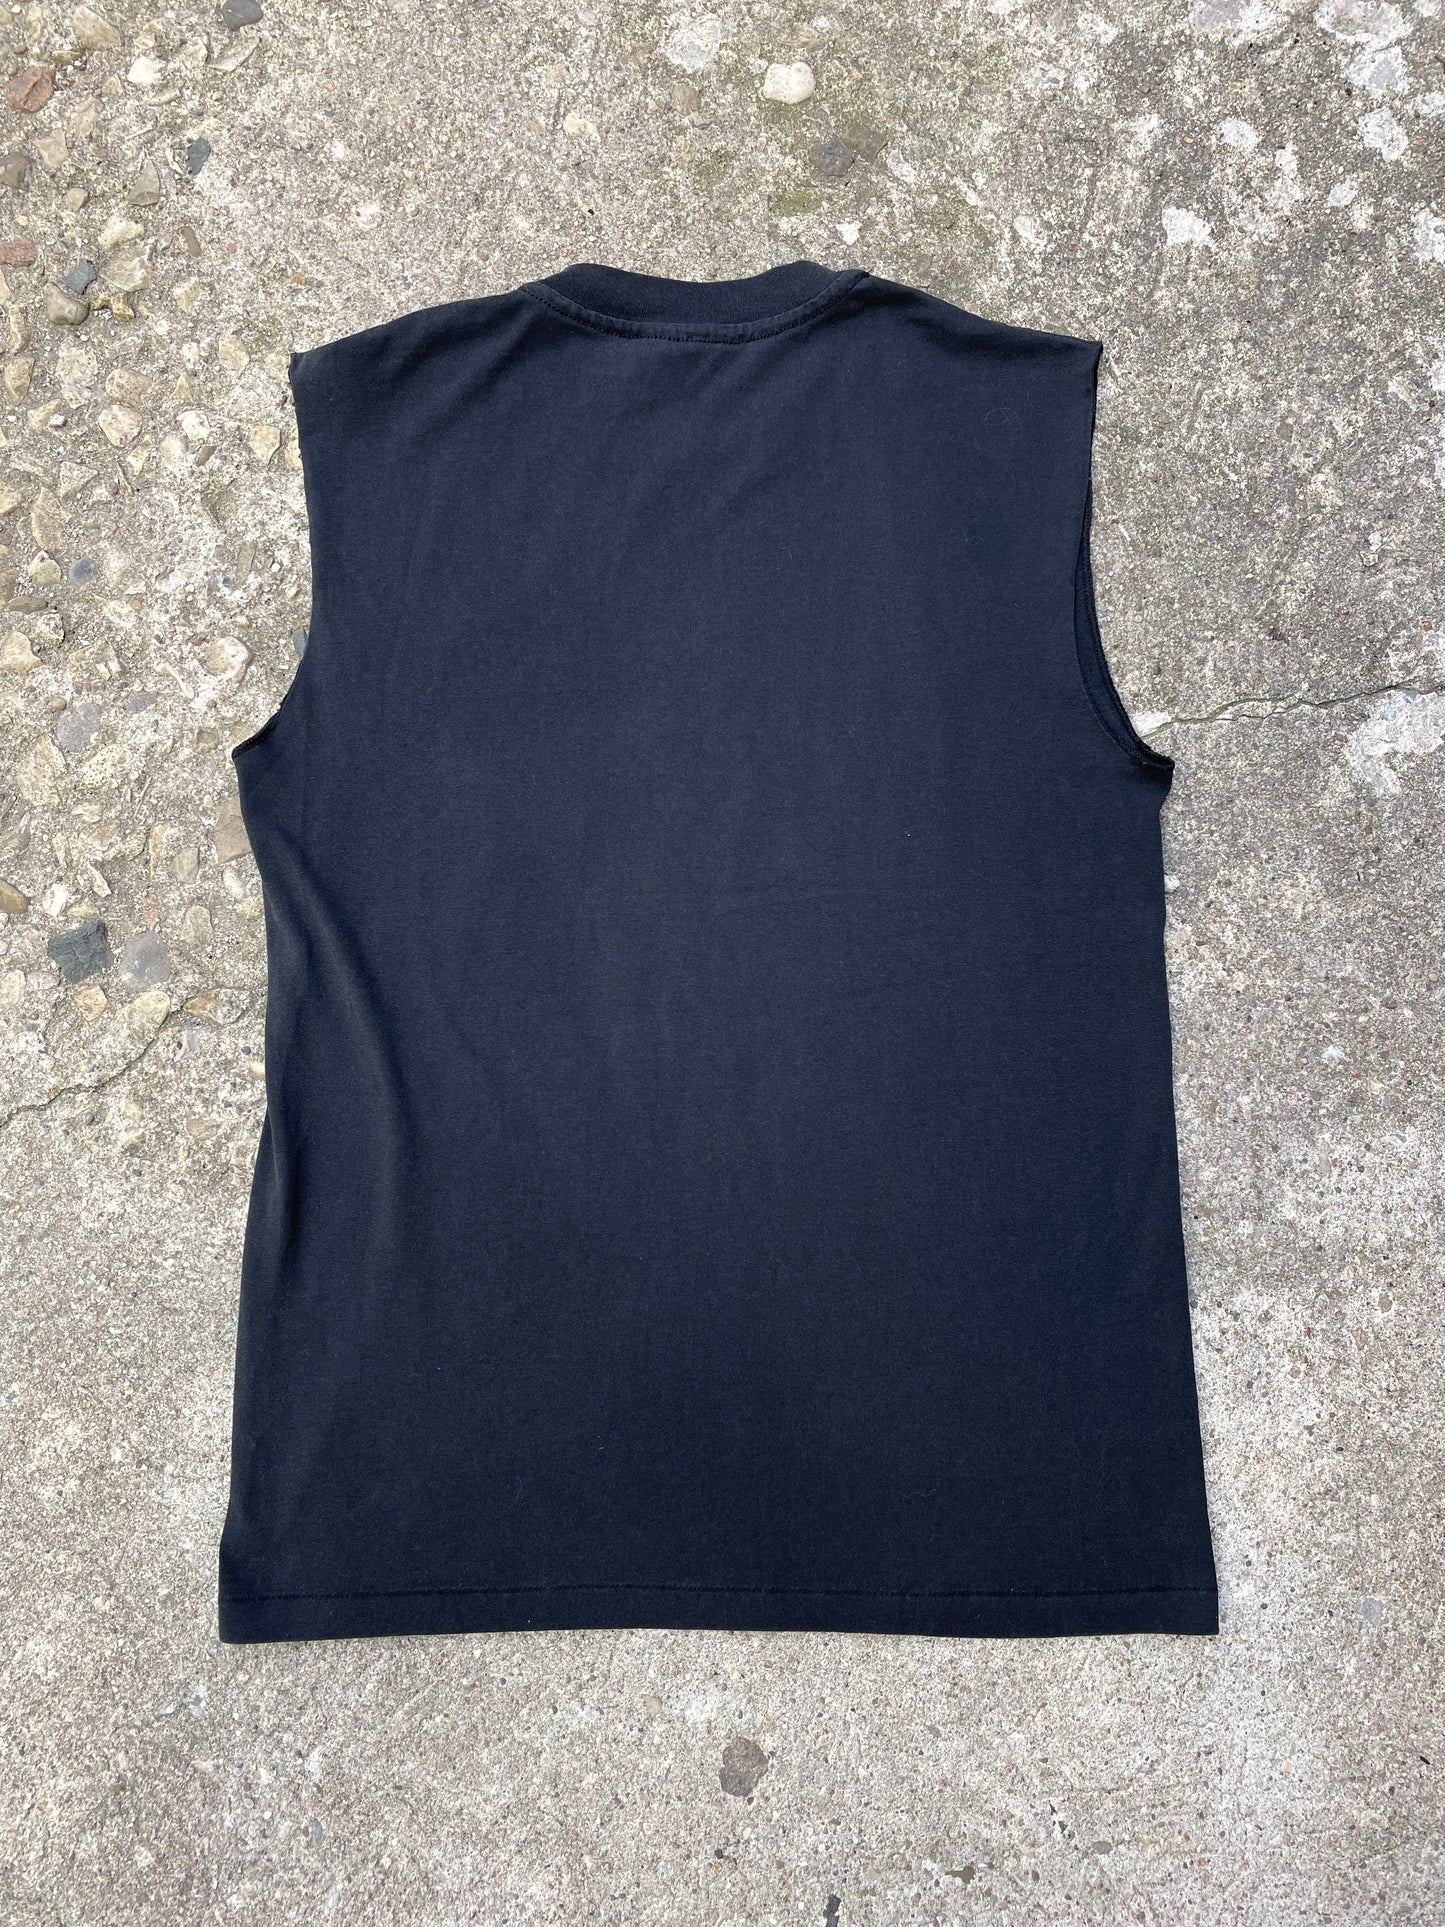 1990's Tom of Finland Art Sleeveless T-Shirt - M